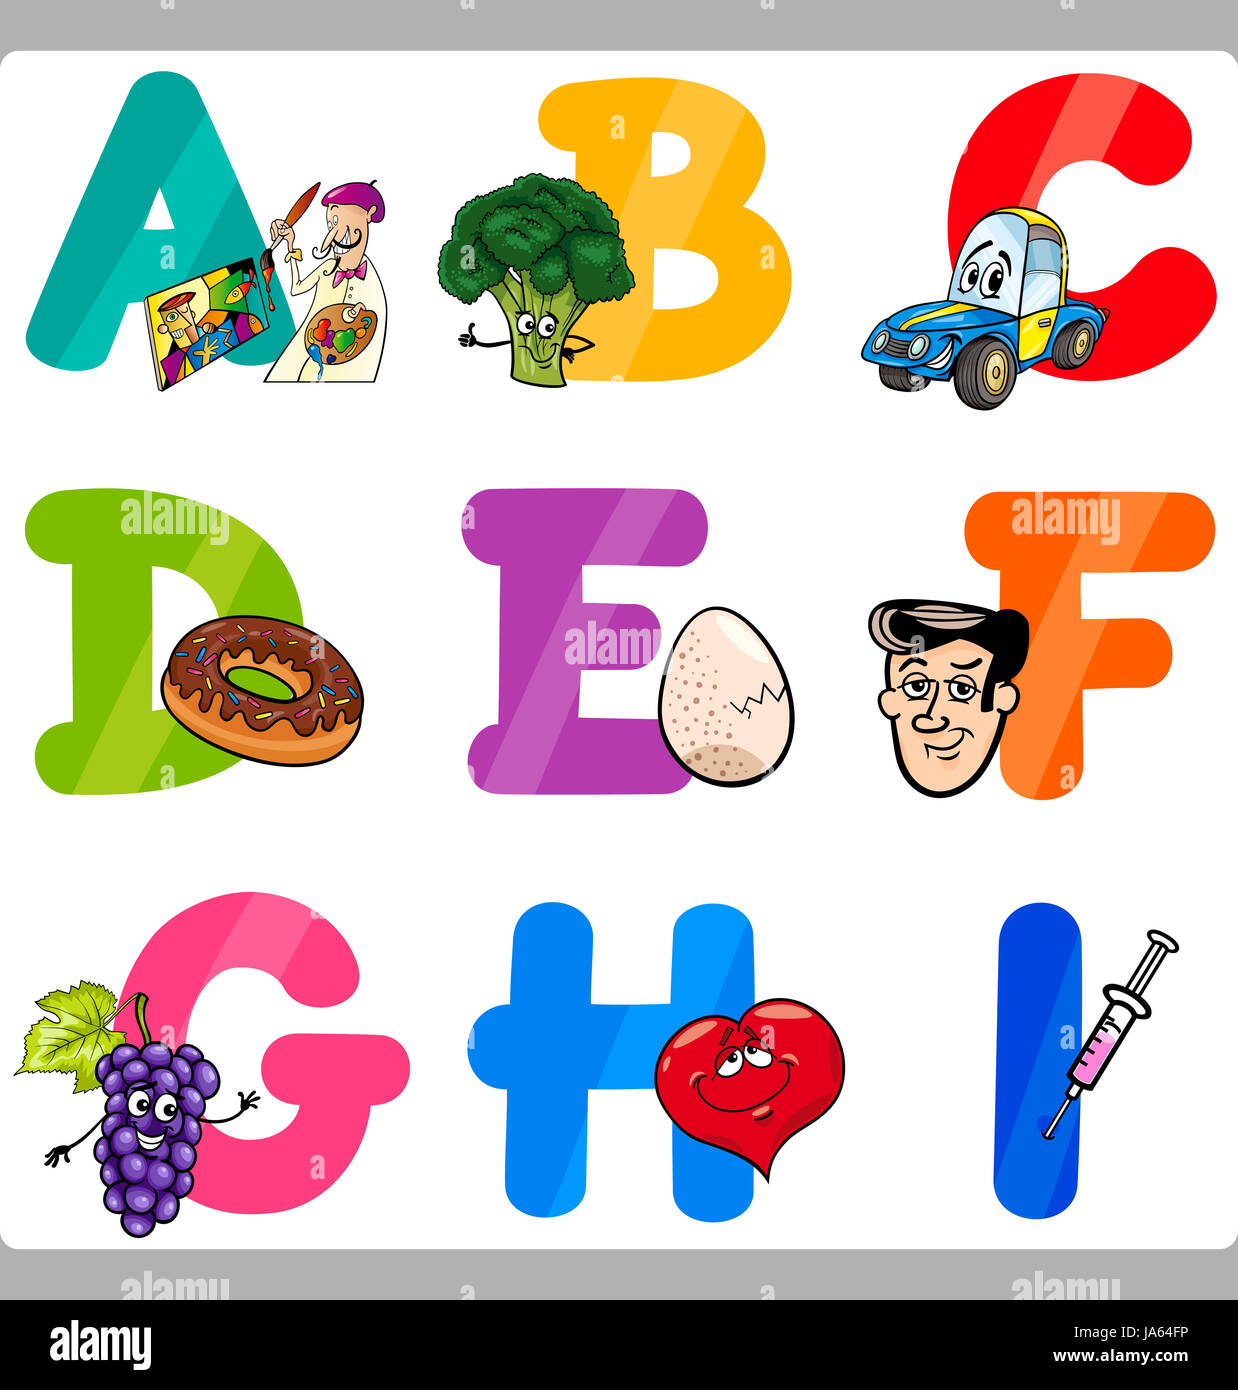 Bildung, Illustration, Alphabet, cartoon, ABC, lernen, Kind, Kinder  Stockfotografie - Alamy